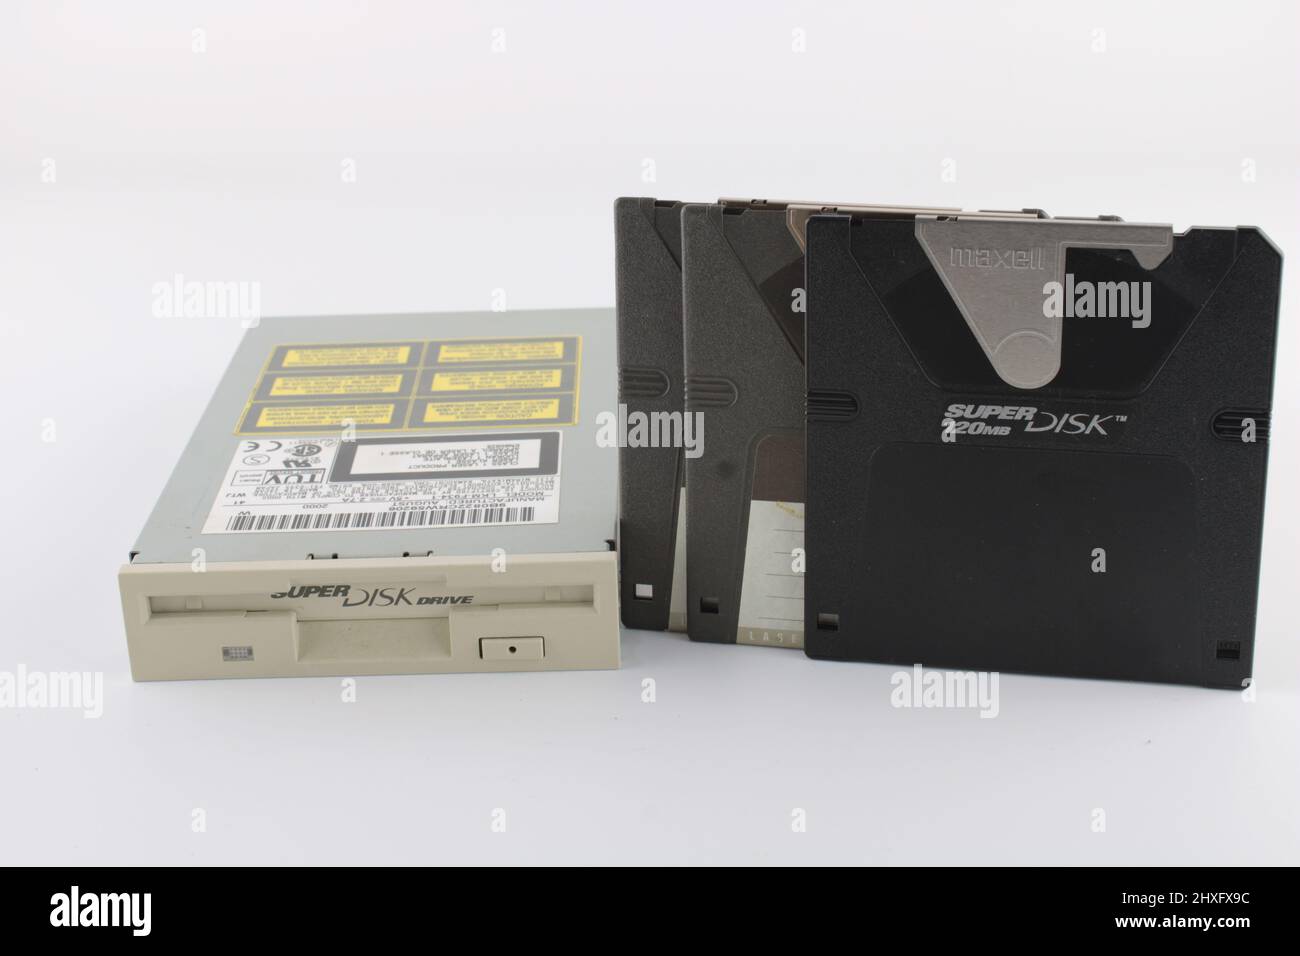 Floppy disk reader and super disk LS120 disks. Stock Photo